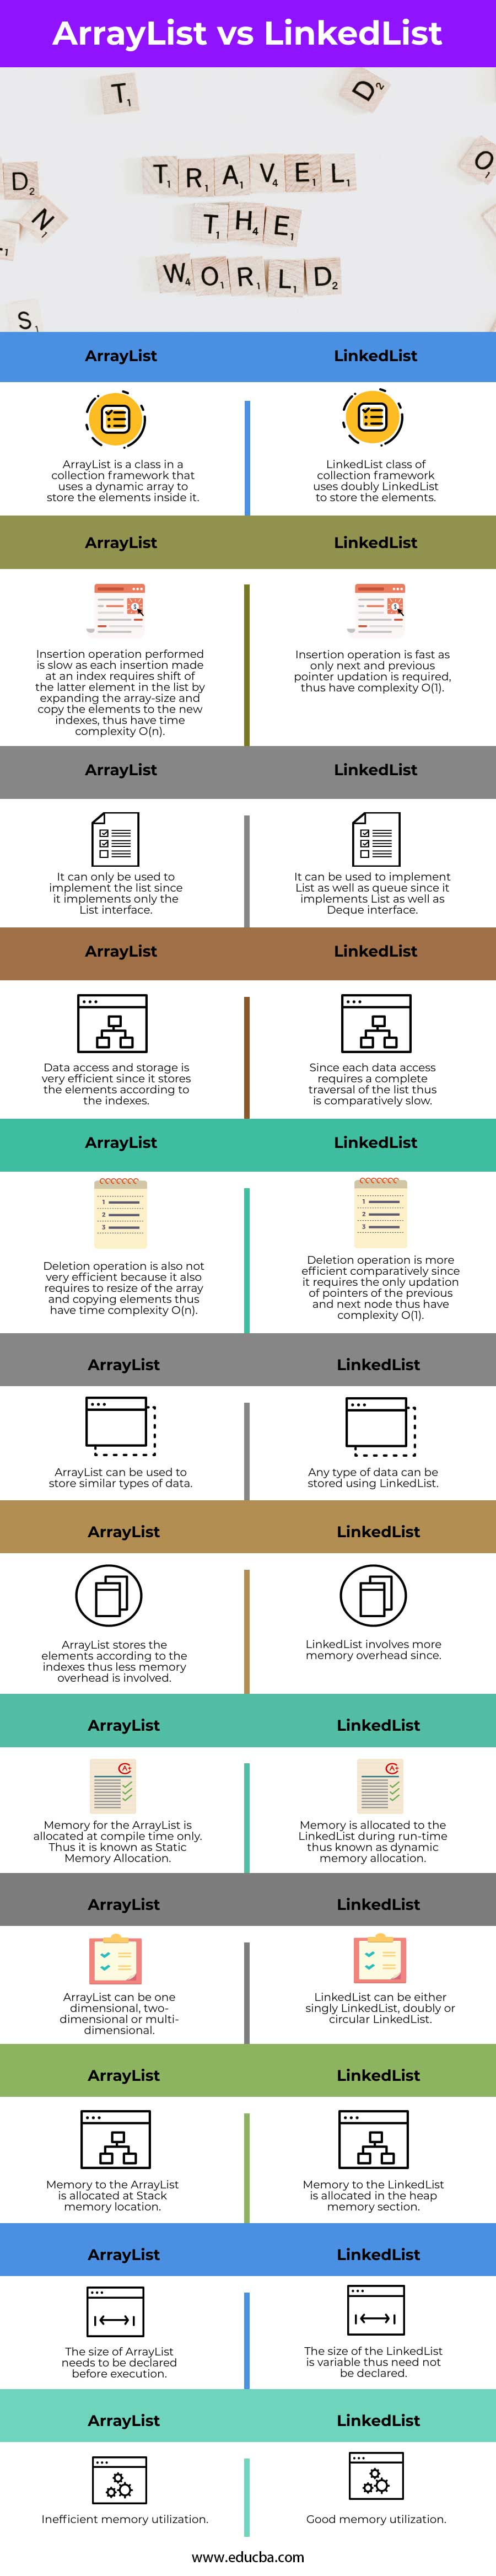 ArrayList-vs-LinkedList-info